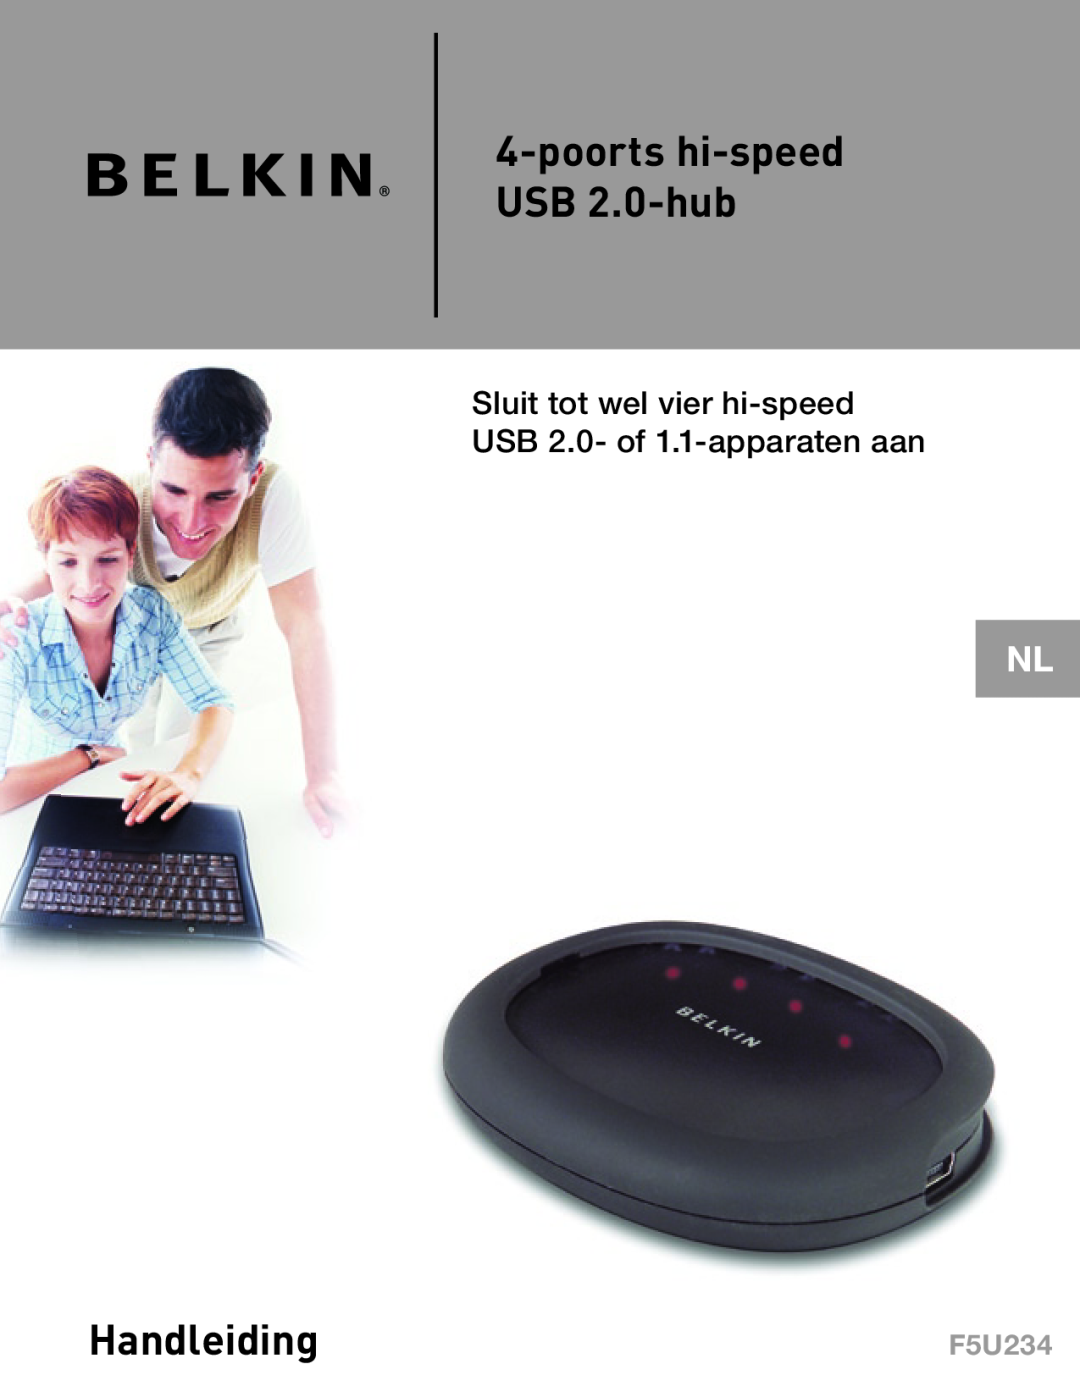 Belkin F5U234 poorts hi-speed USB 2.0-hub, Handleiding, Sluit tot wel vier hi-speed USB 2.0- of 1.1-apparaten aan 